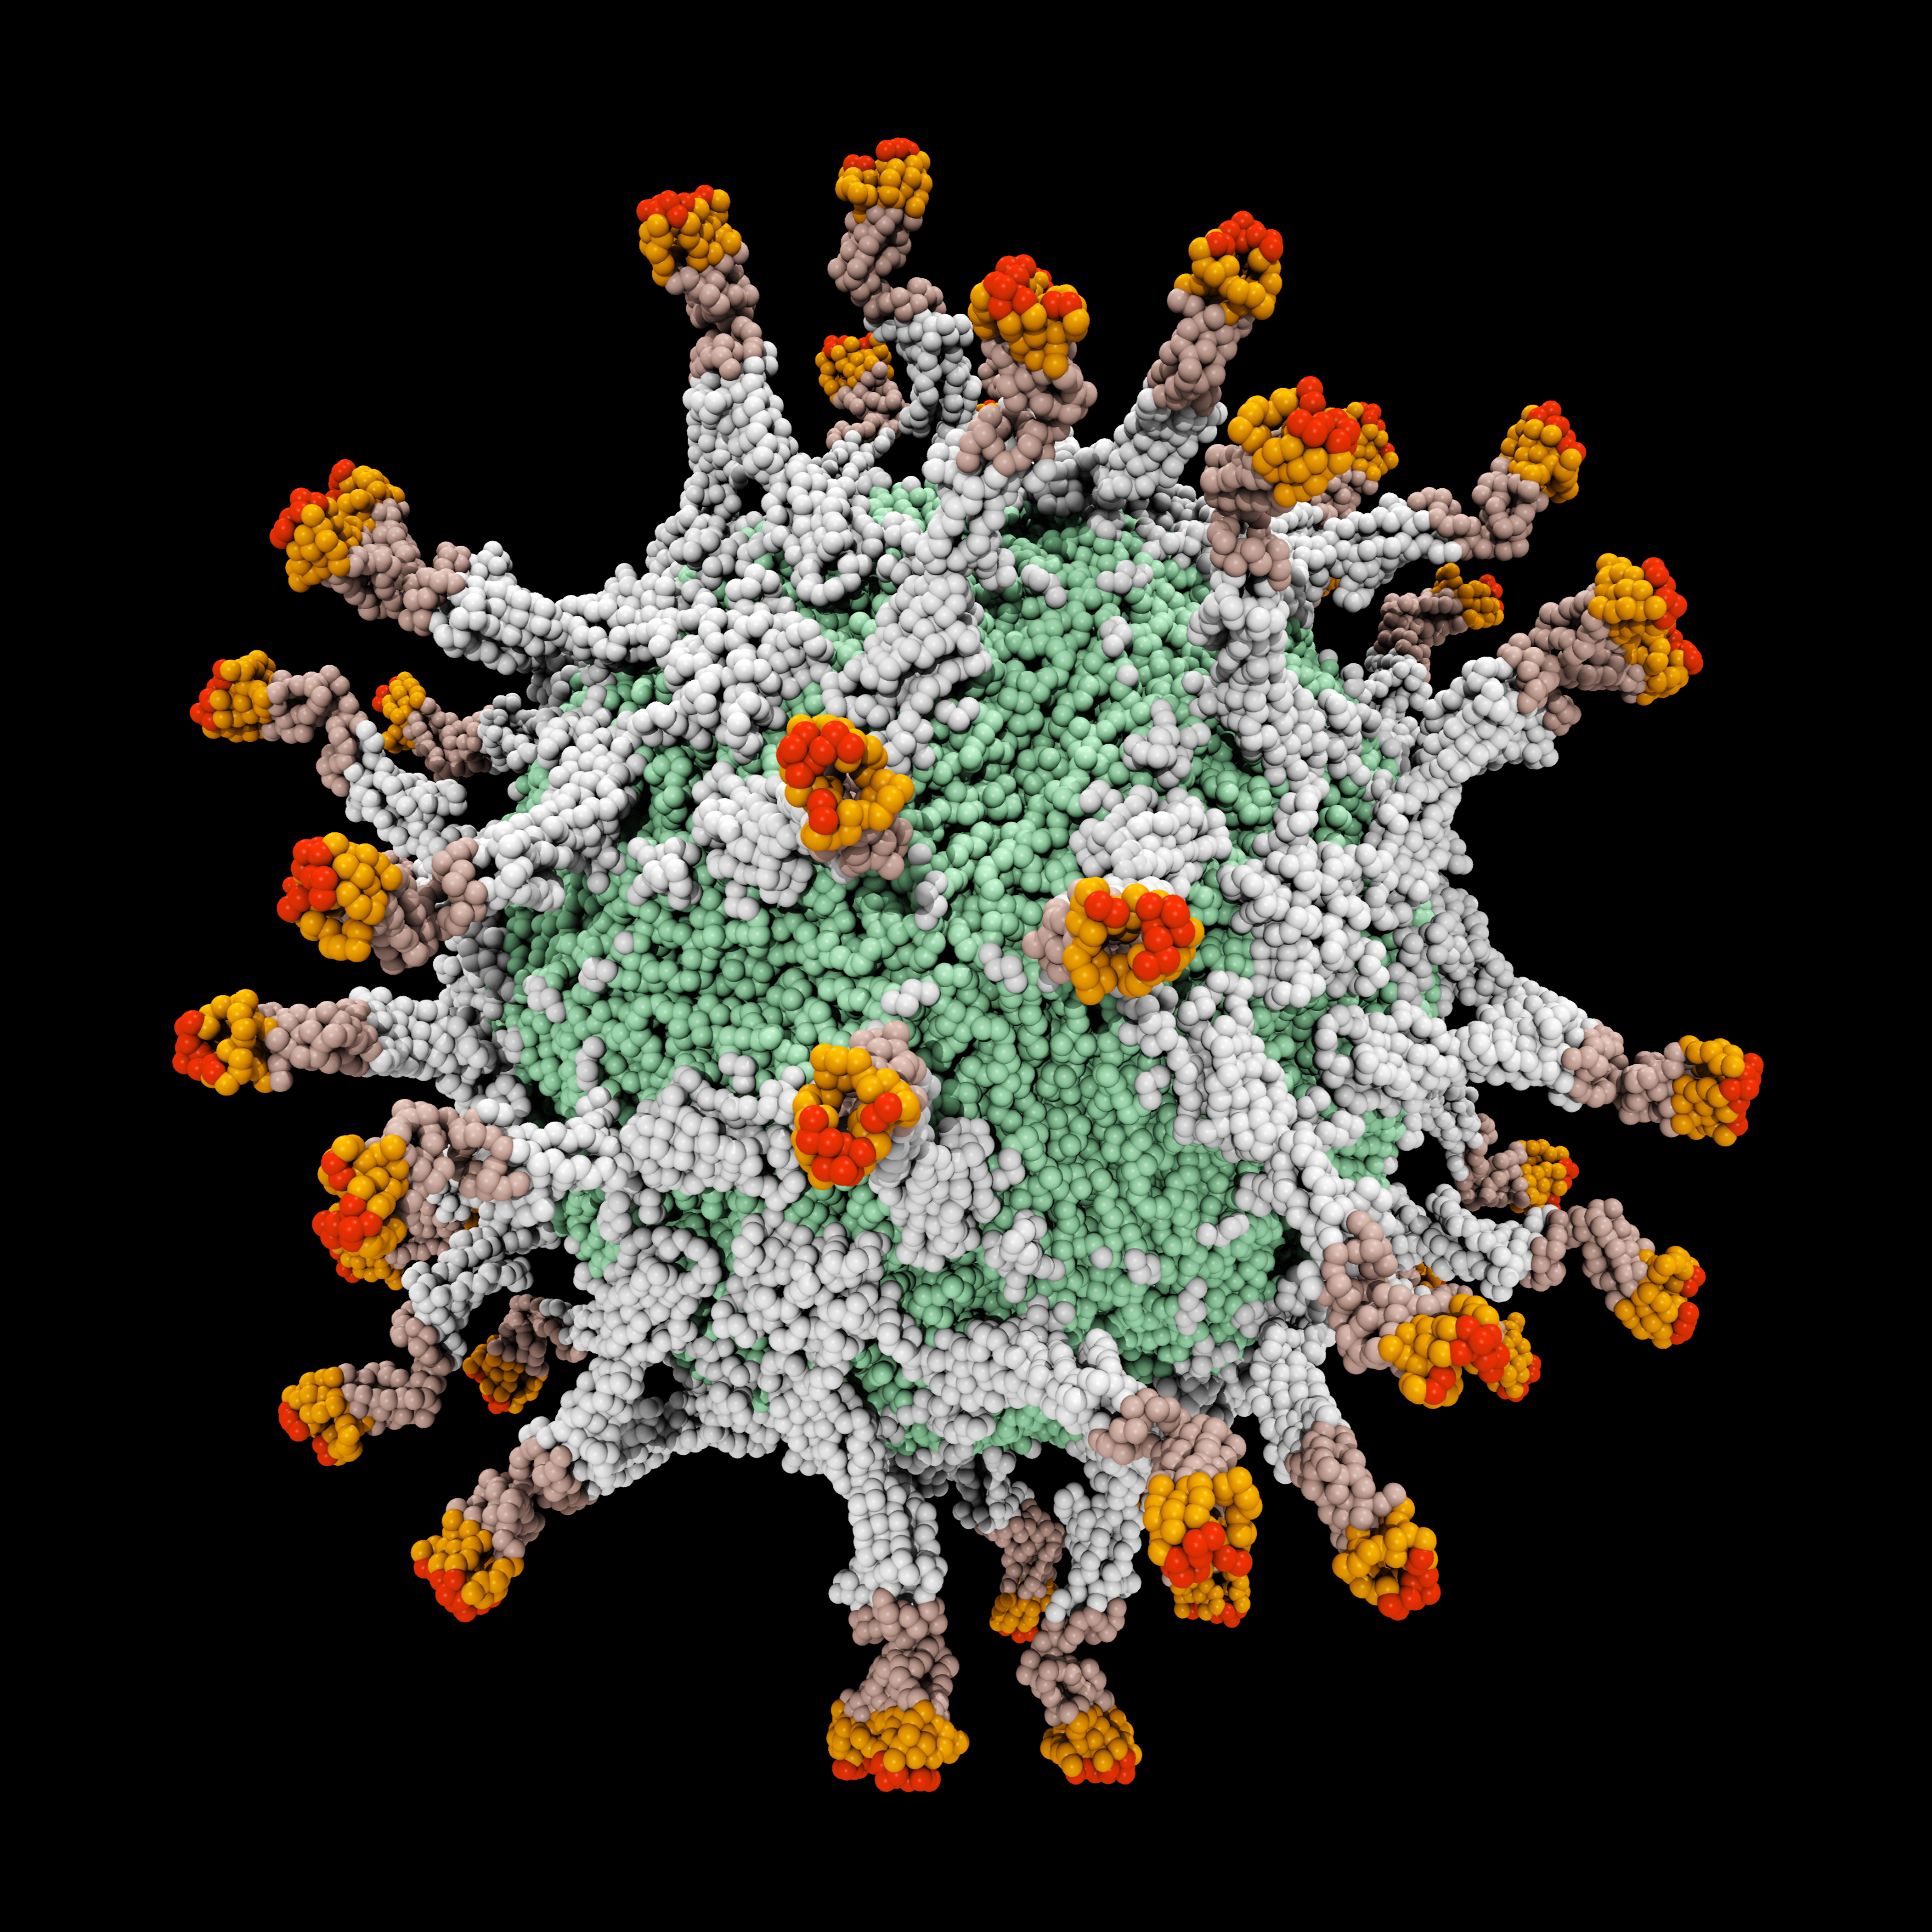 Digitally generated image of 3D molecular model of polio virus